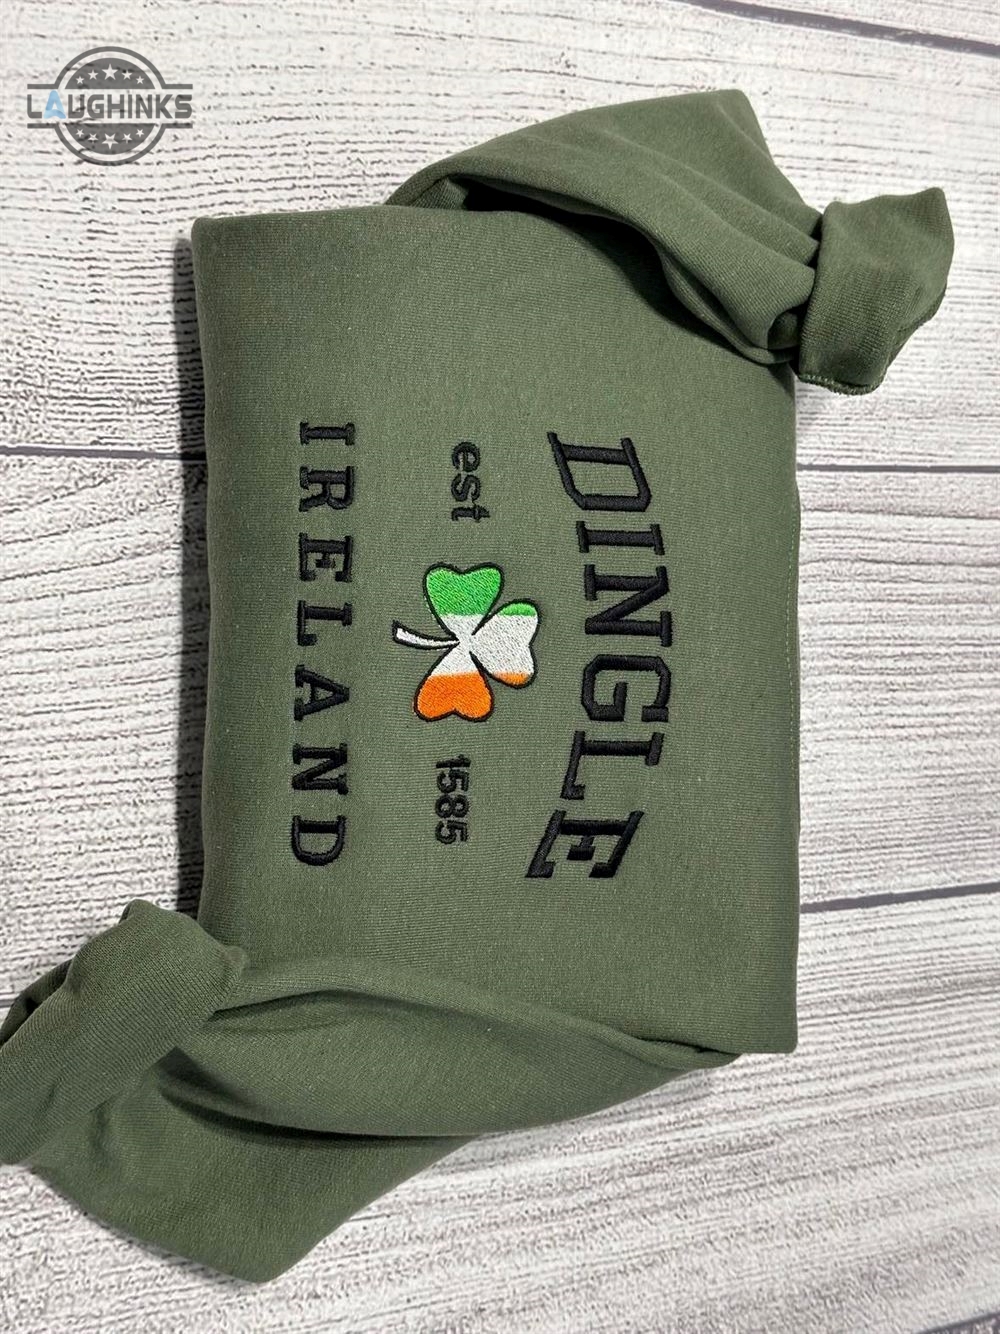 Dingle Ireland Embroidered Sweatshir Womens Embroidered Sweatshirts Tshirt Sweatshirt Hoodie Trending Embroidery Tee Gift